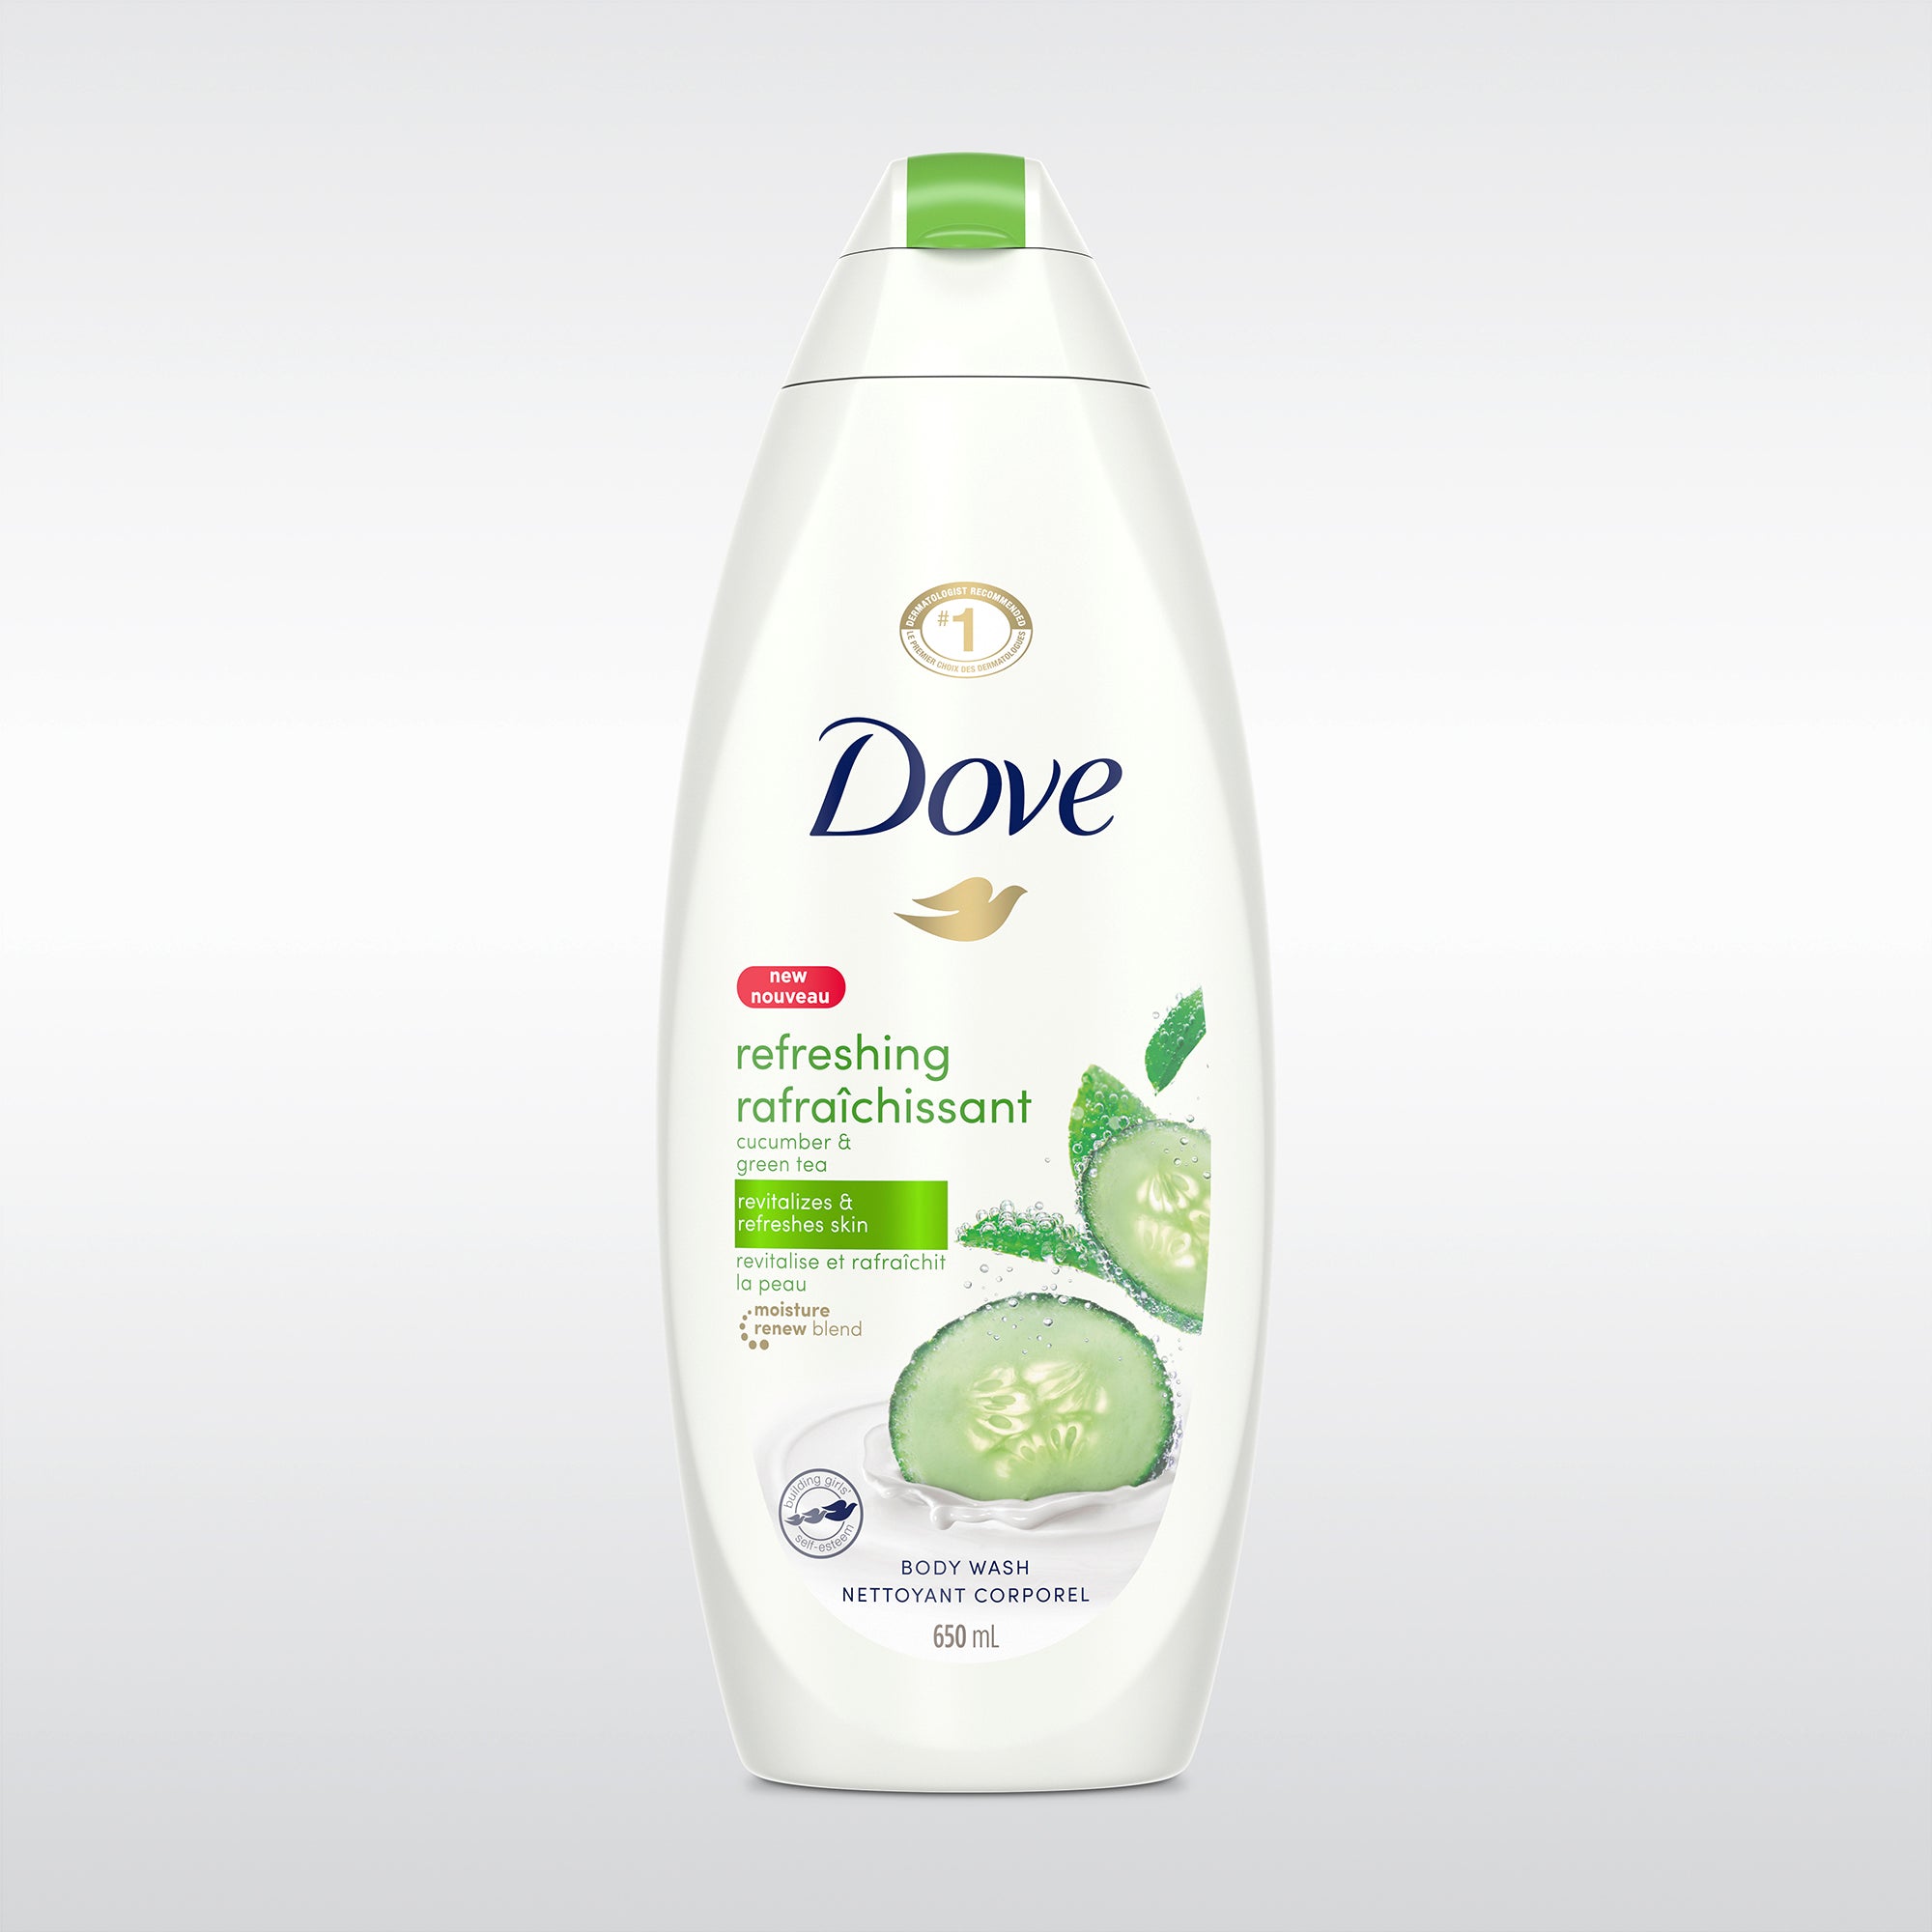 Dove refreshing body wash